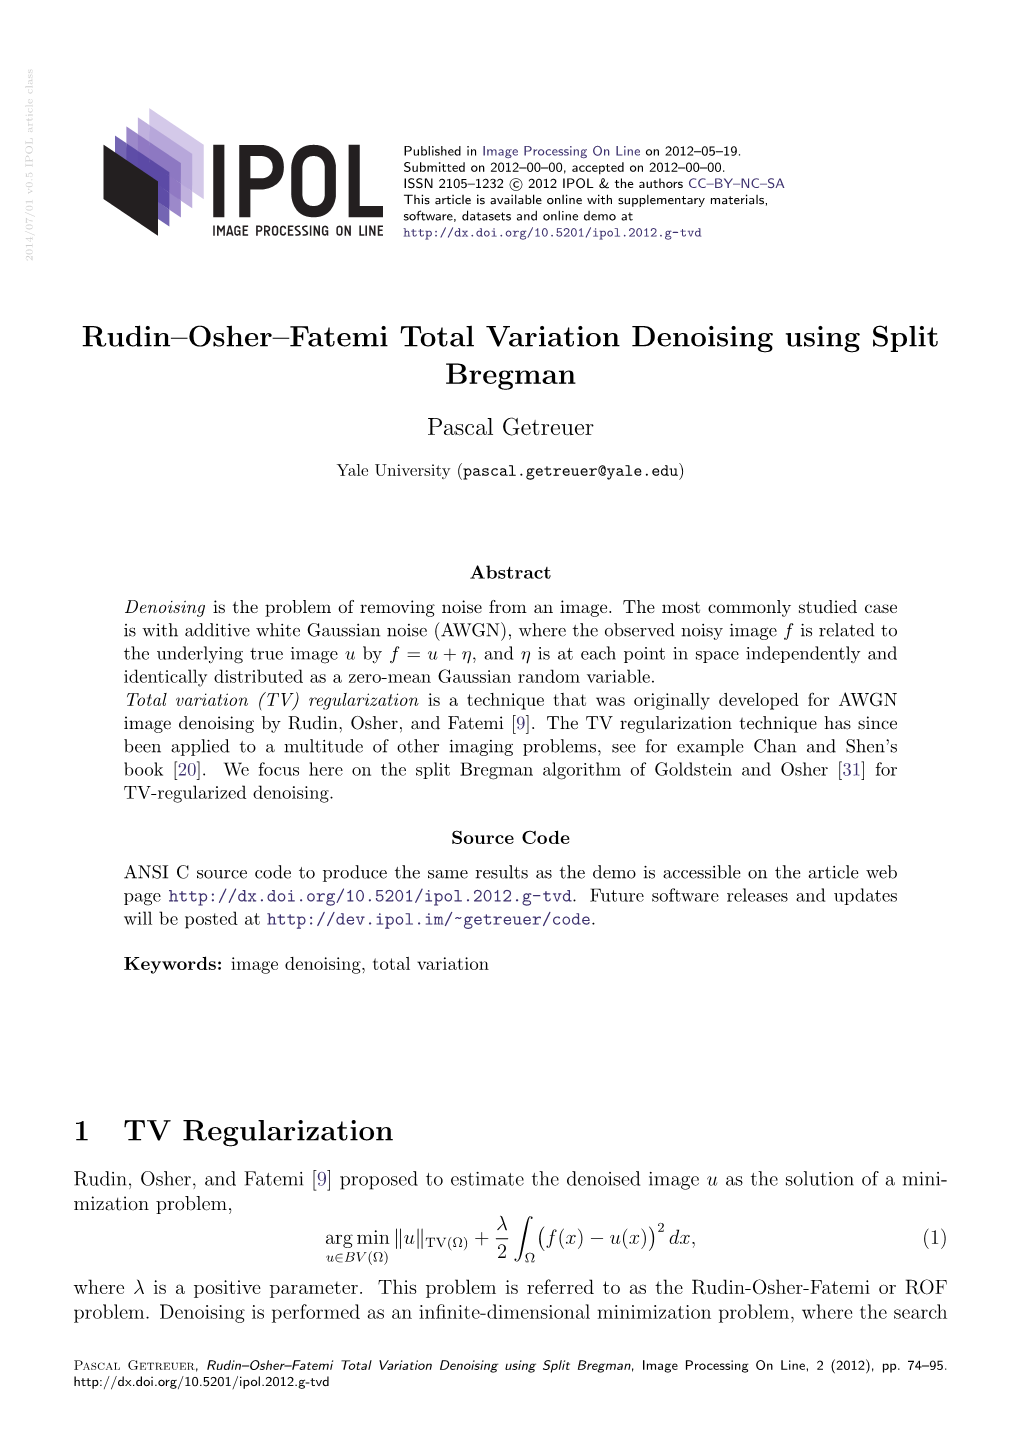 Rudin–Osher–Fatemi Total Variation Denoising Using Split Bregman